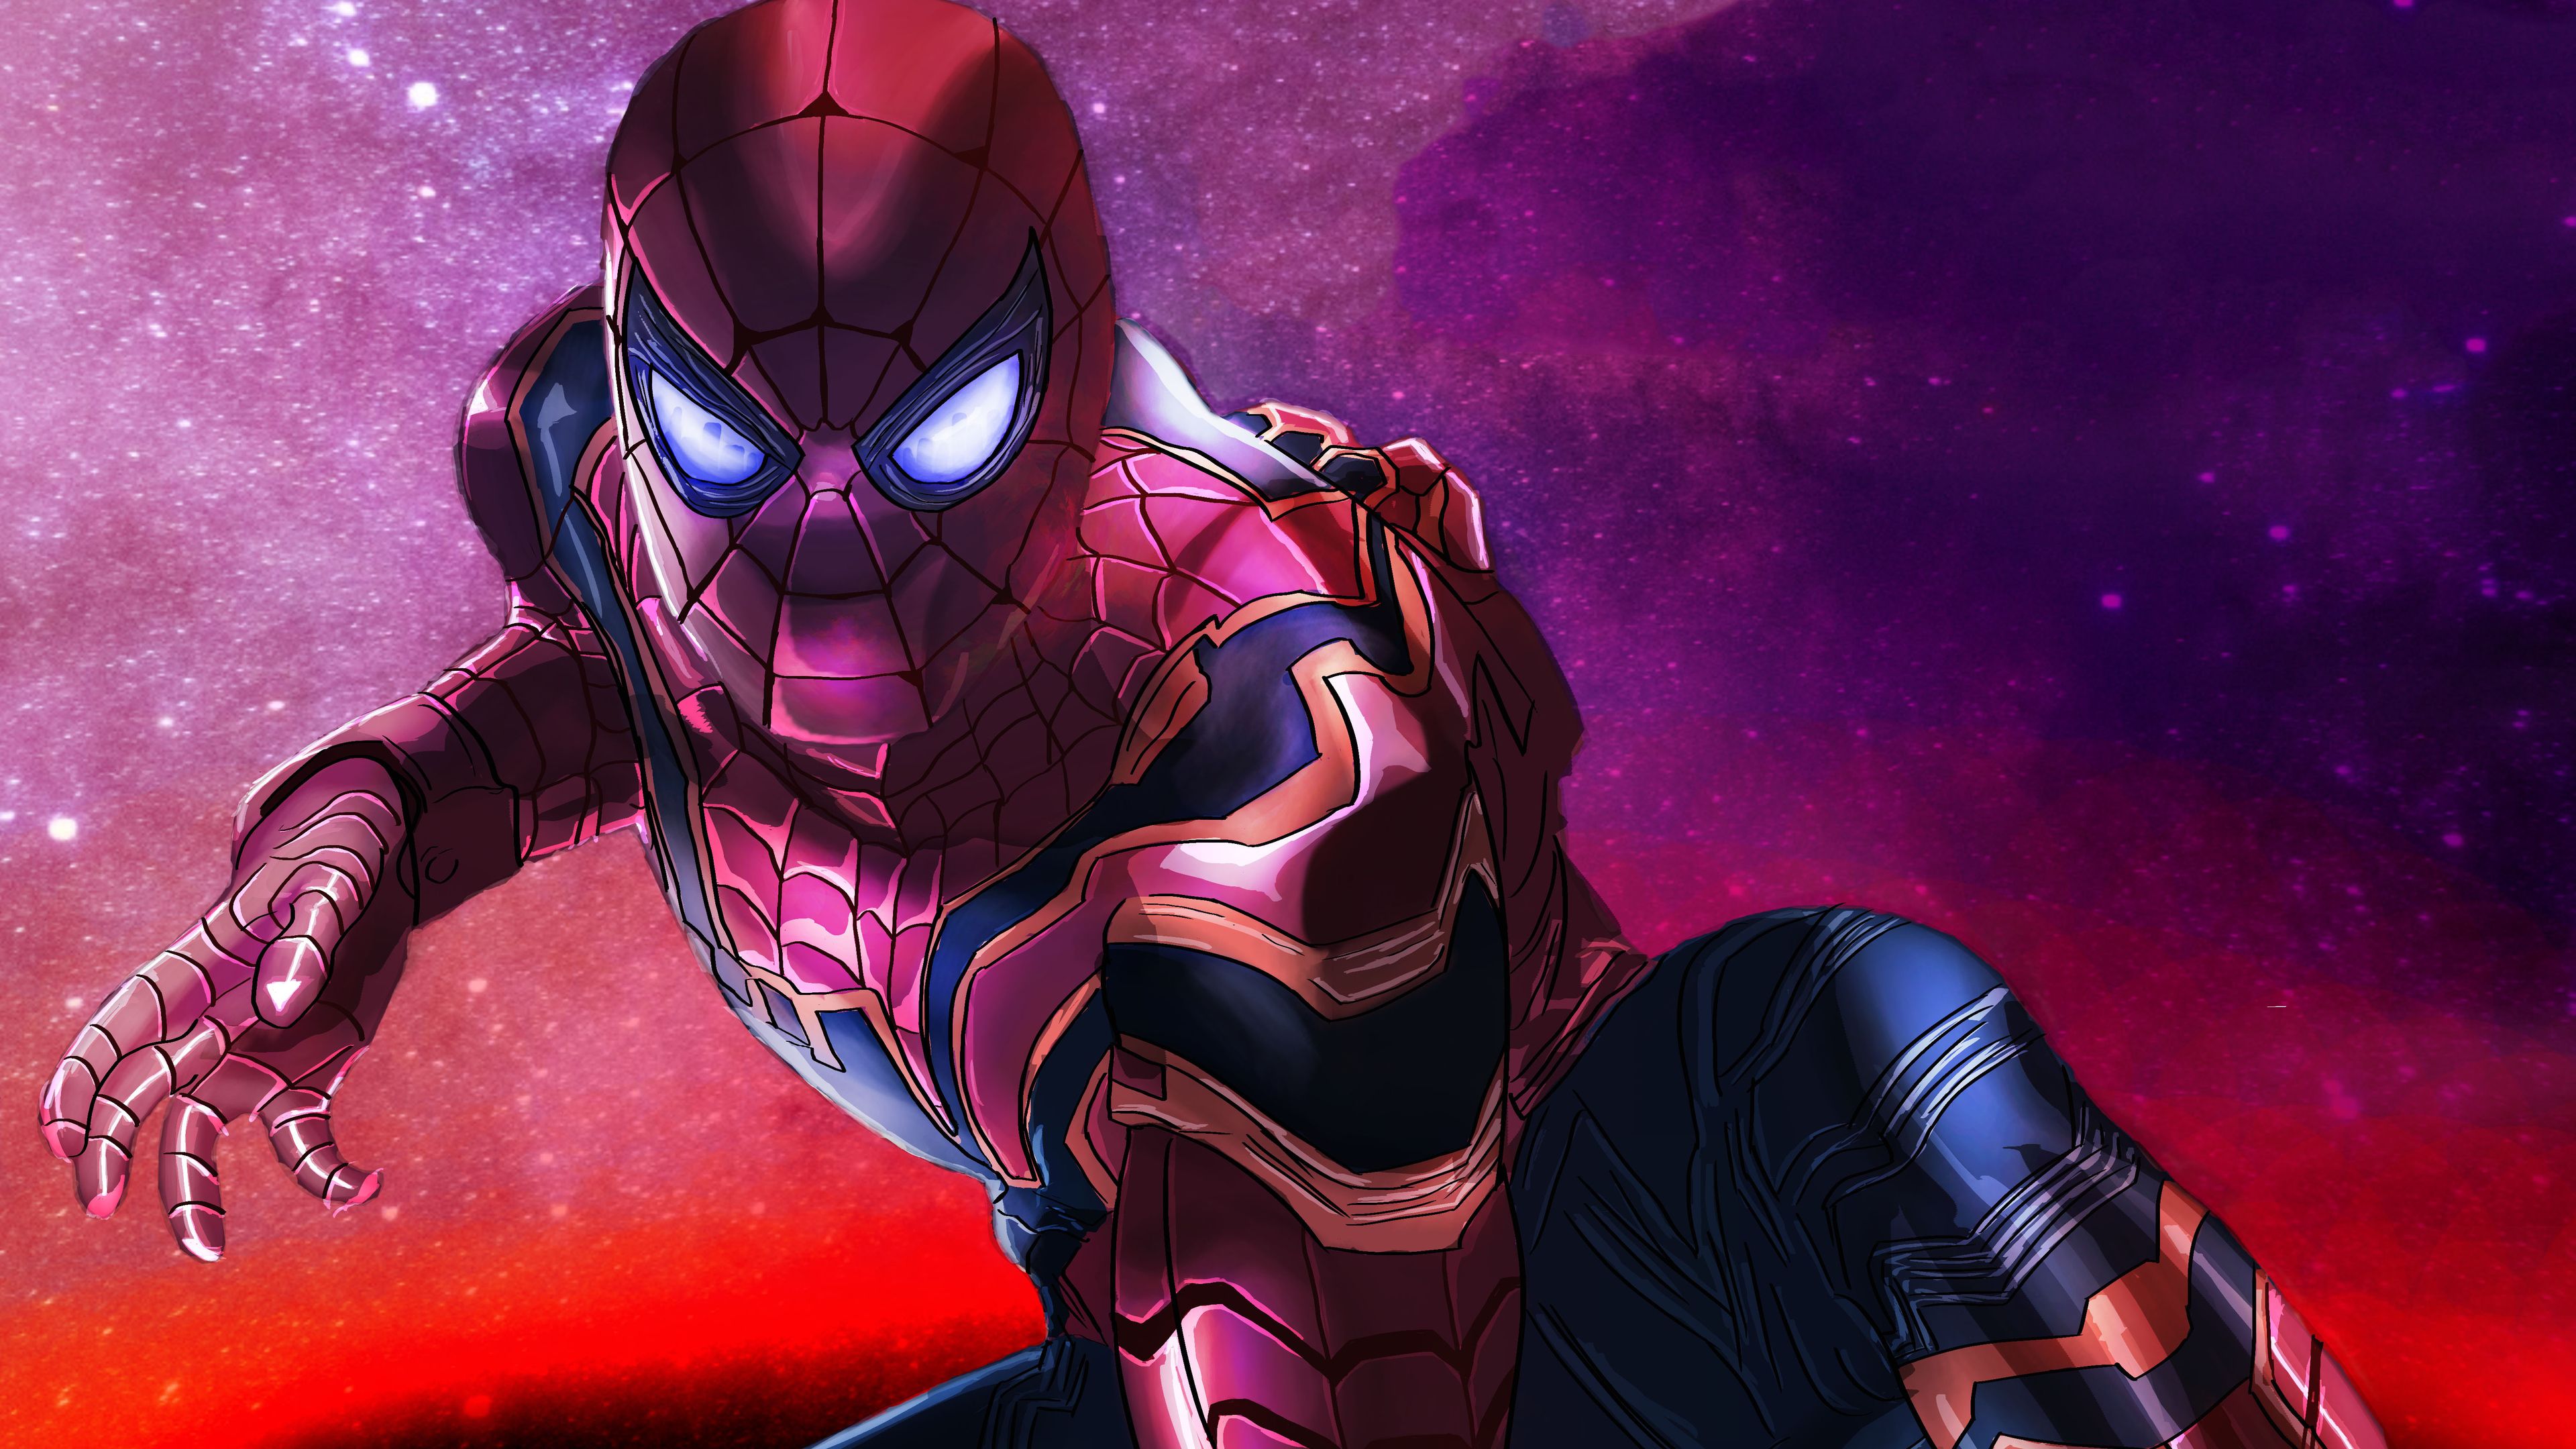 Spiderman 4k Avengers Infinity War superheroes wallpapers